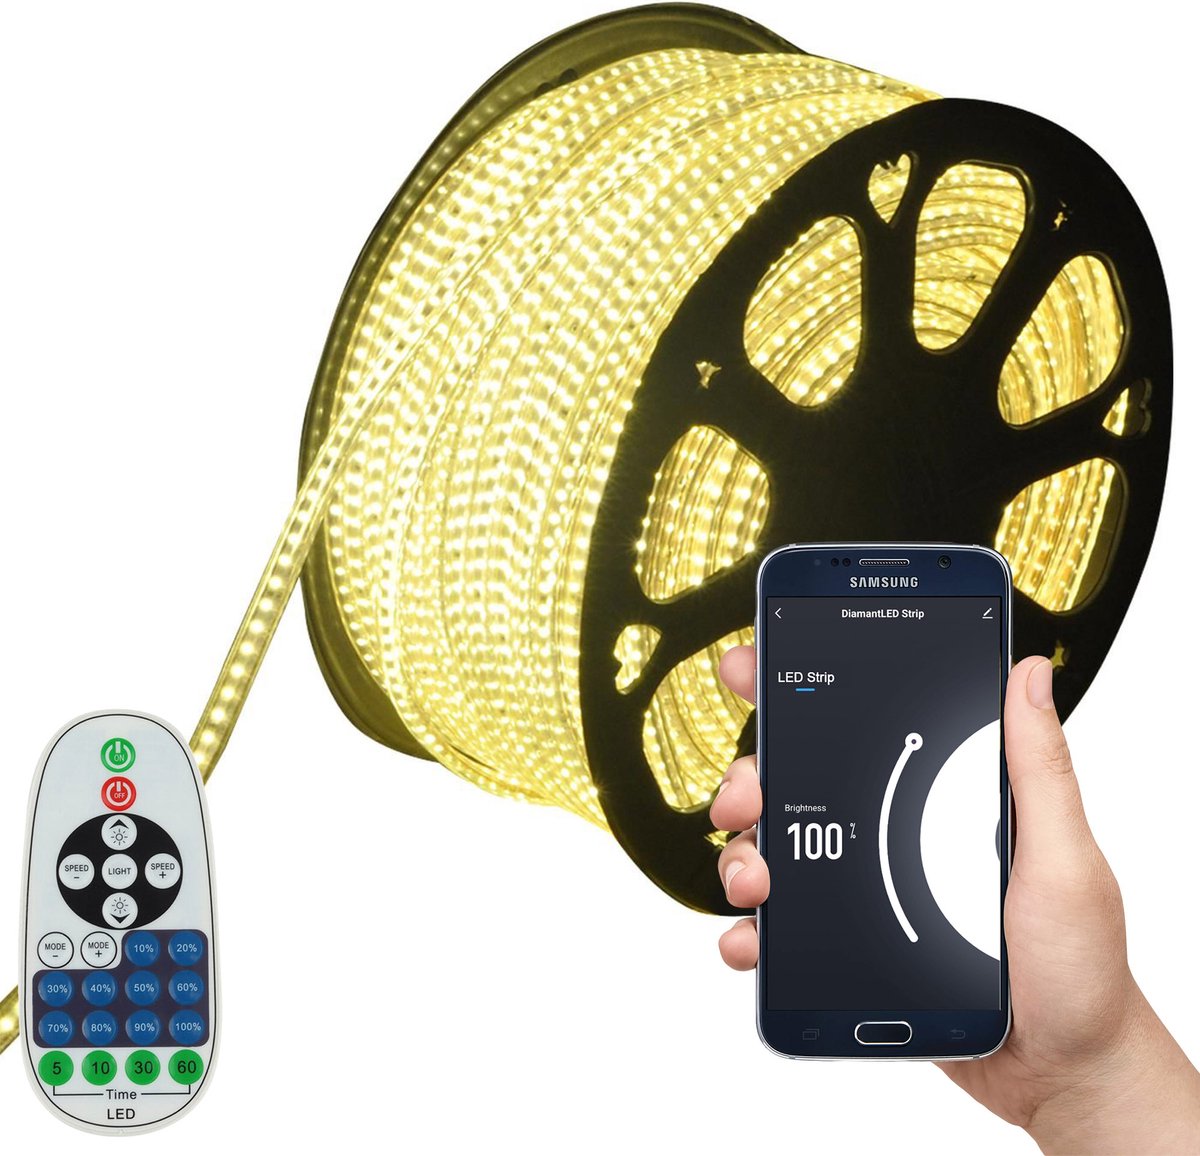 LED Strip Warm Wit - 40 Meter aan één stuk - 180 LED's per meter - Met Wi-Fi App + IR 23 knops afstandsbediening - Smarthome - Google Home/Amazon Alexa - Waterdicht - Makkelijke mobiele App voor bedienen inclusief afstandsbediening - iOS en Android